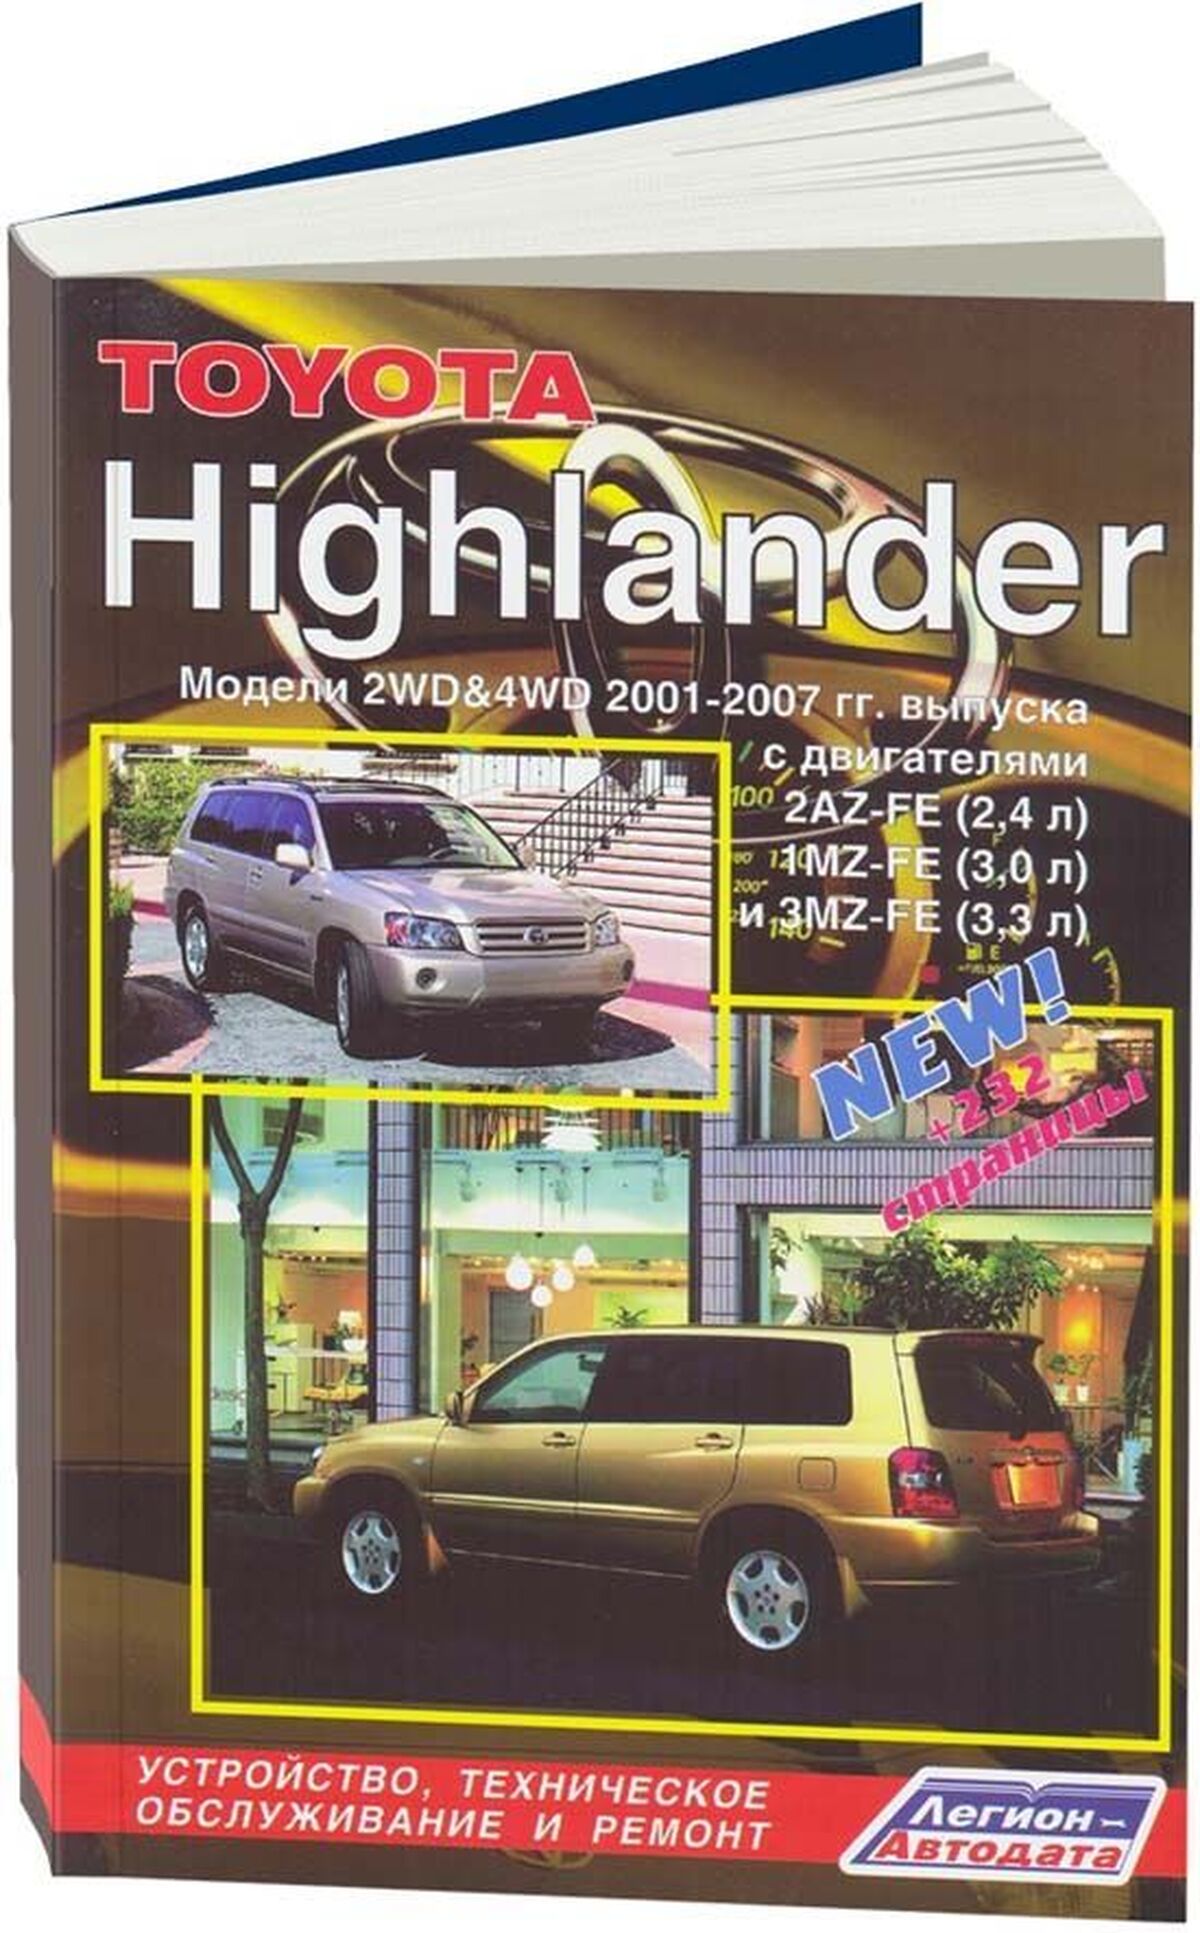 Книга: TOYOTA HIGHLANDER (2WD и 4WD) (б), рем., экспл., то | Легион-Aвтодата